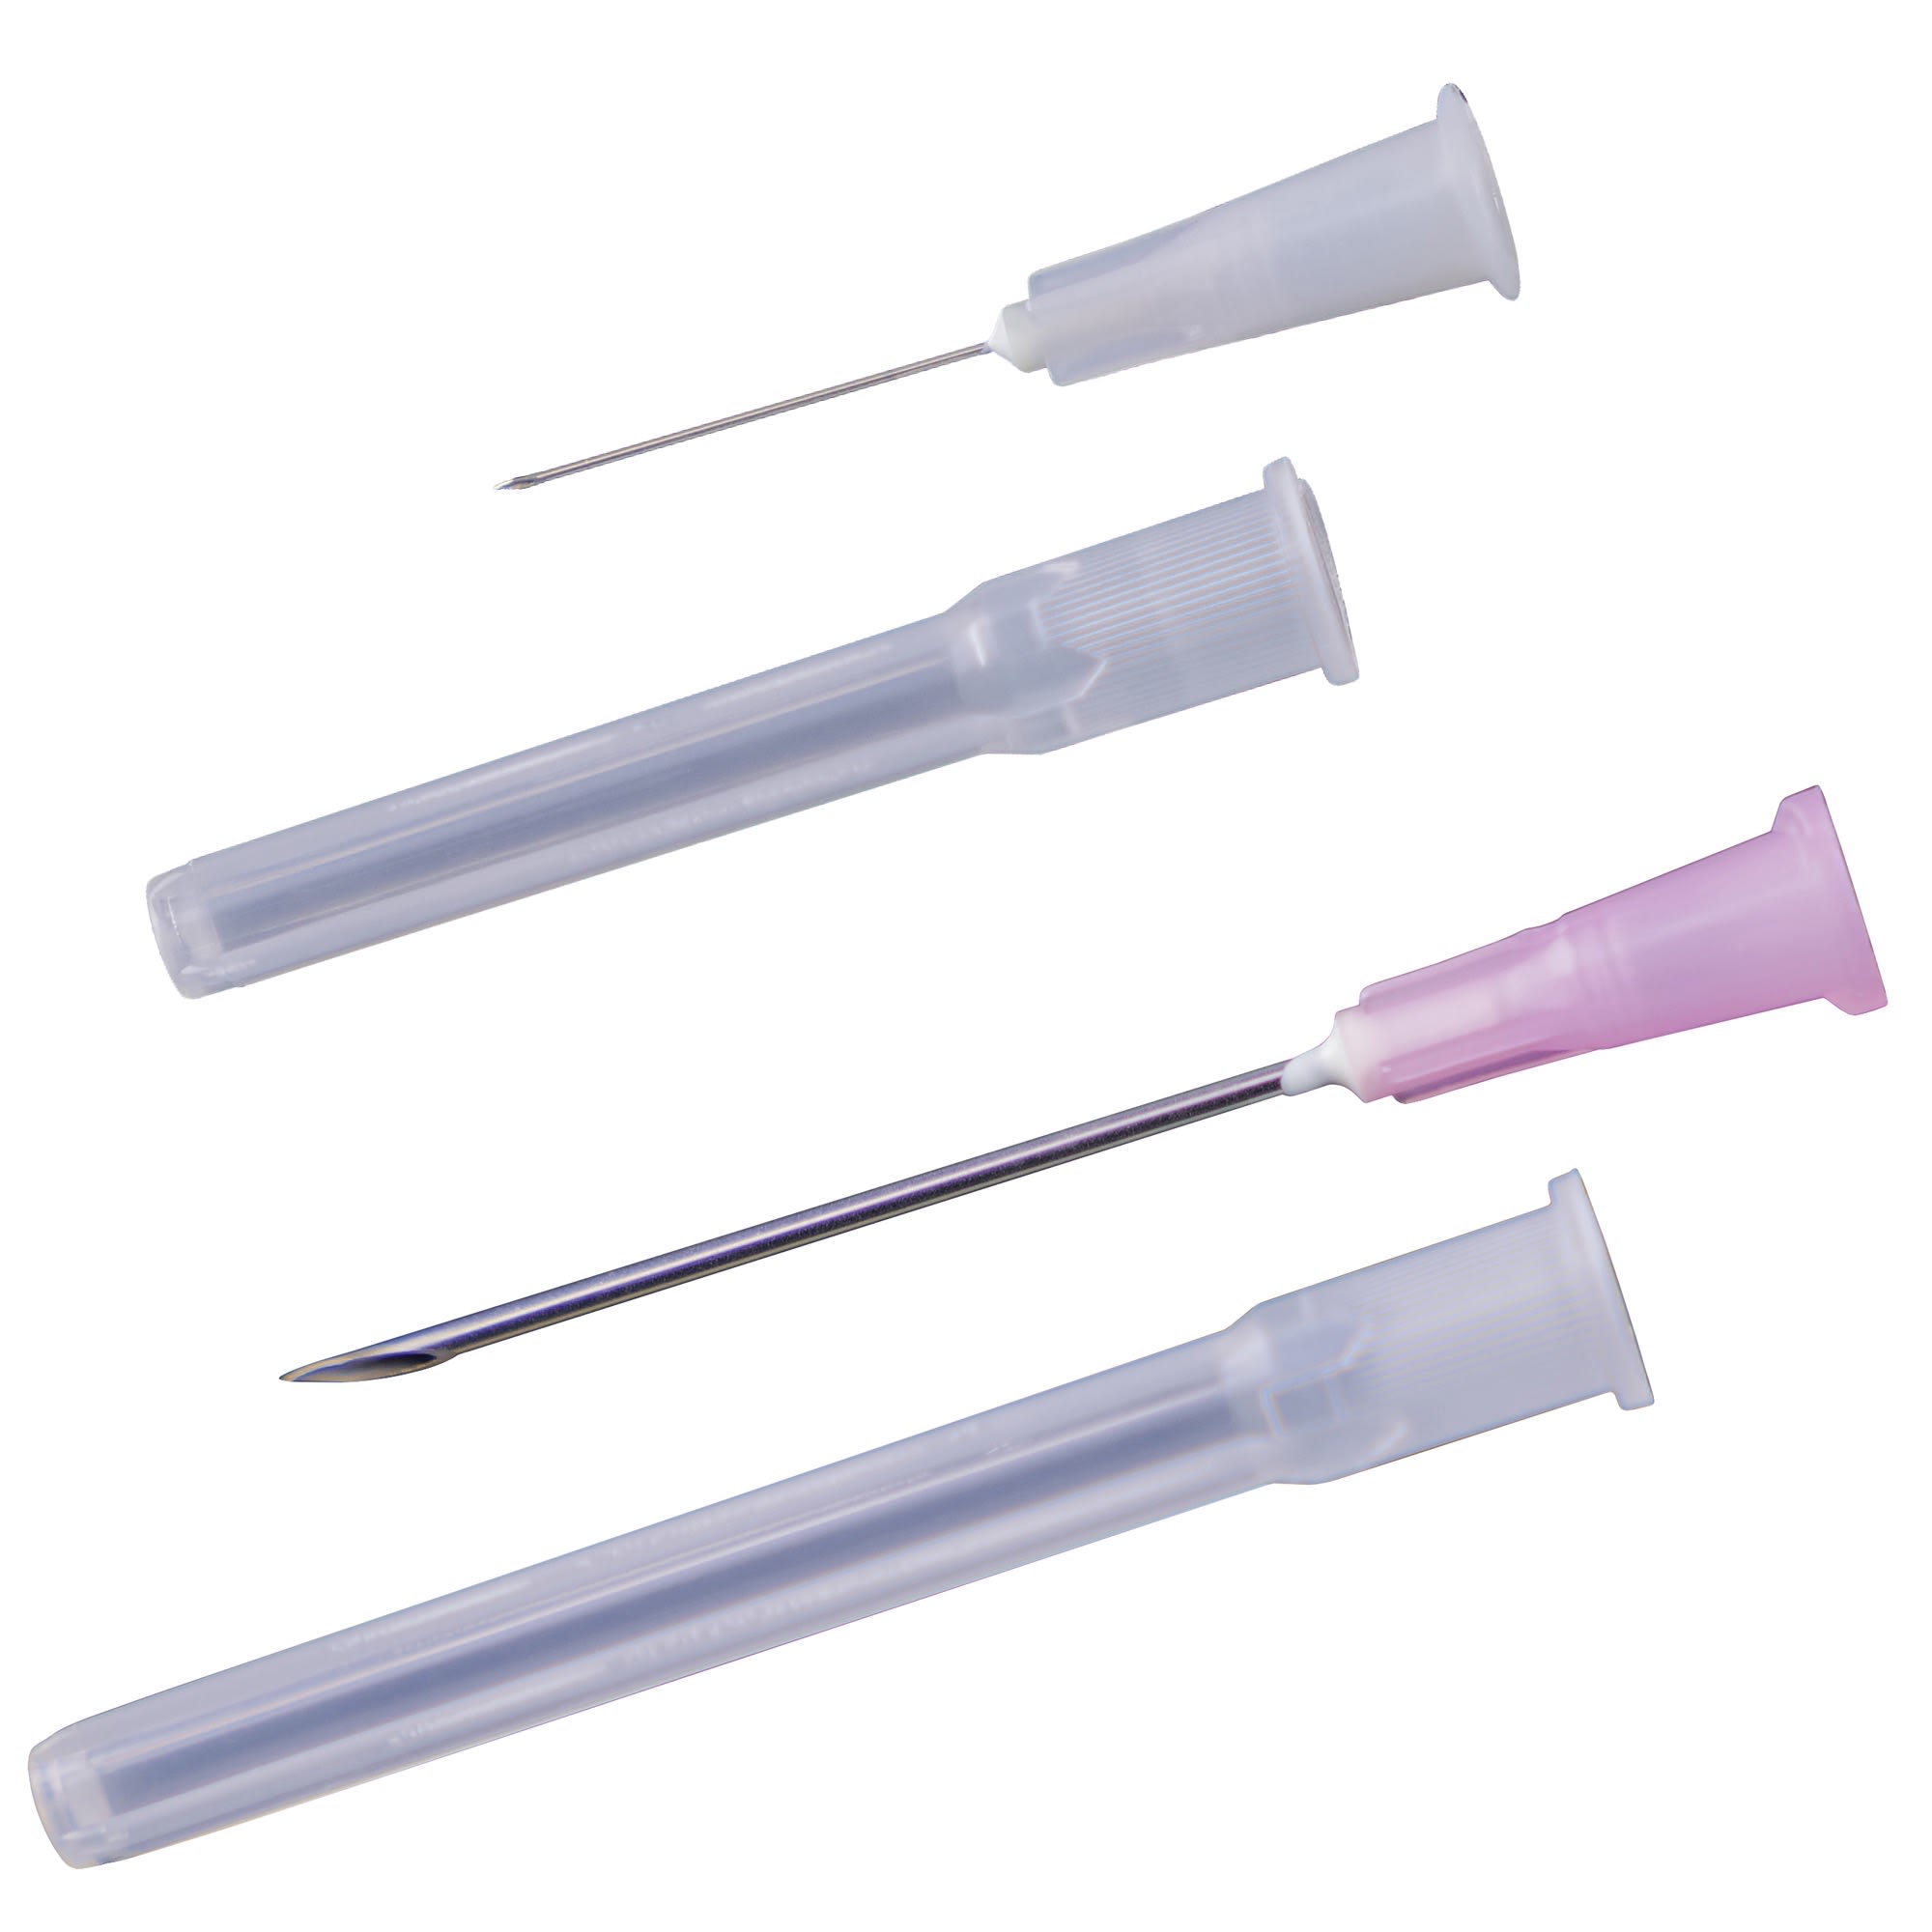 Dosing needles sharp tip, image 2